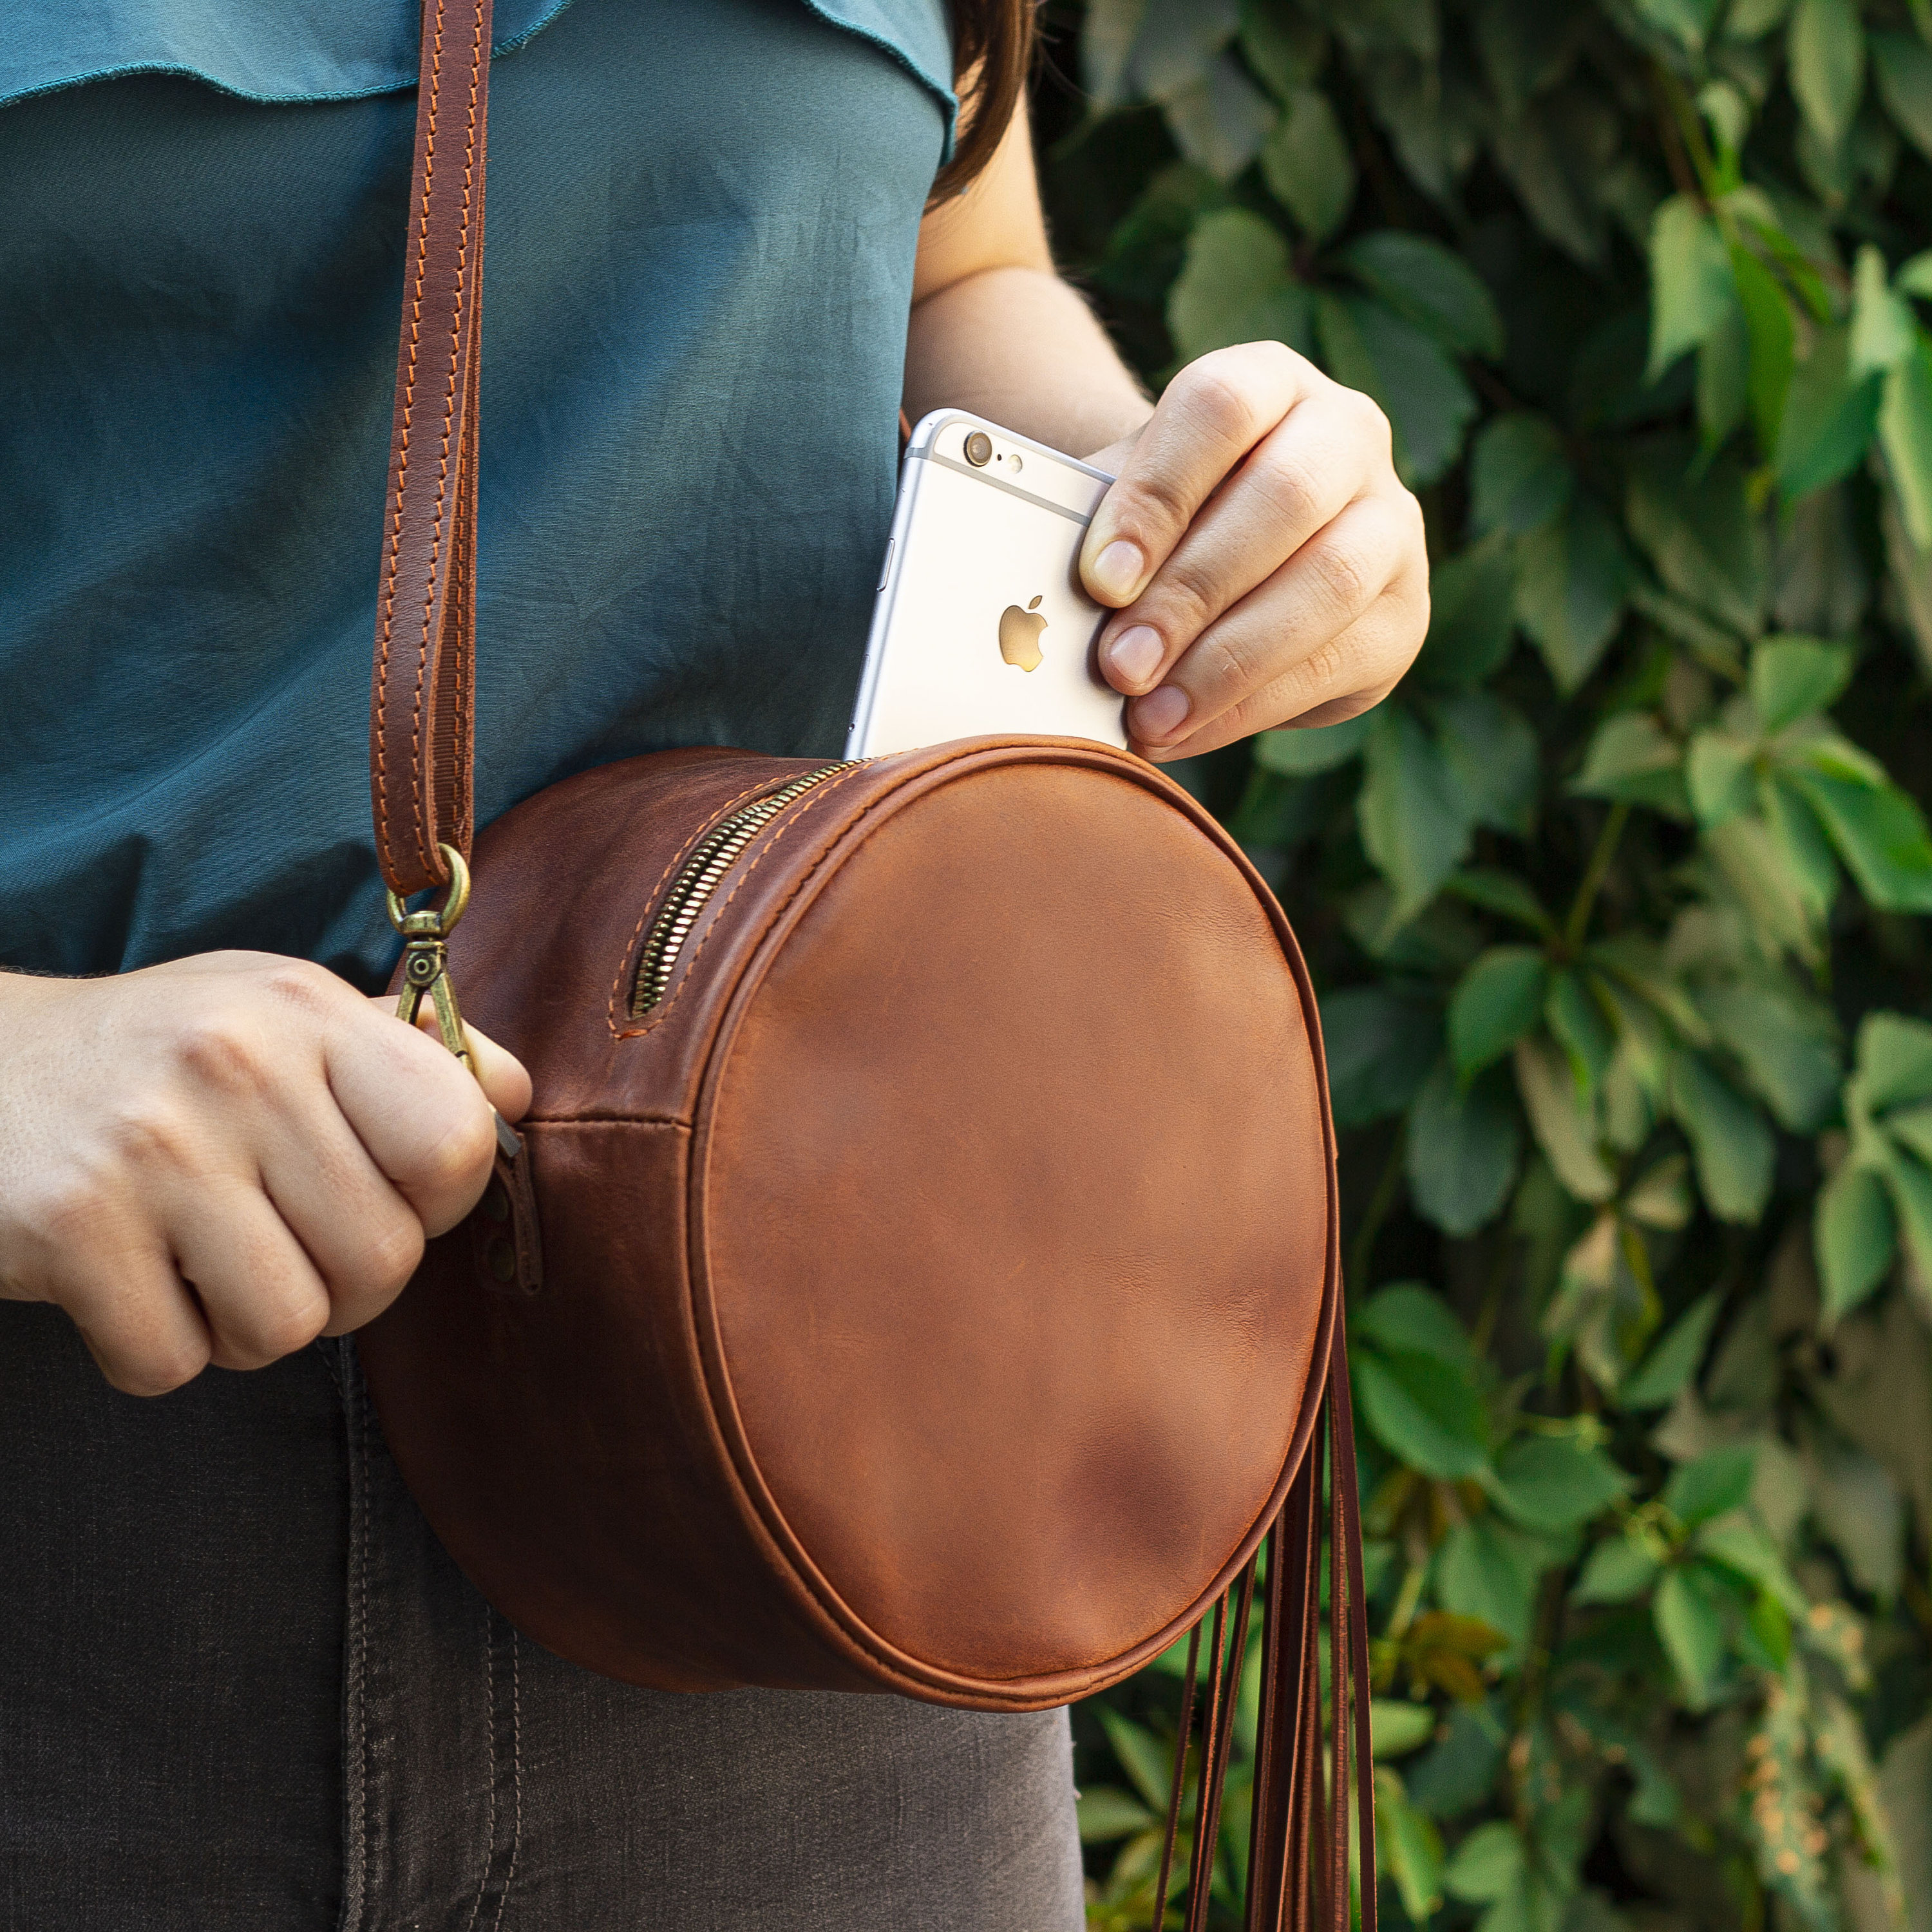 borsa pantera borsa fatta a mano borsa con montatura rotonda borsa a tracolla Borse e borsette Borse Borse a tracolla borsa rotonda borsa in legno 